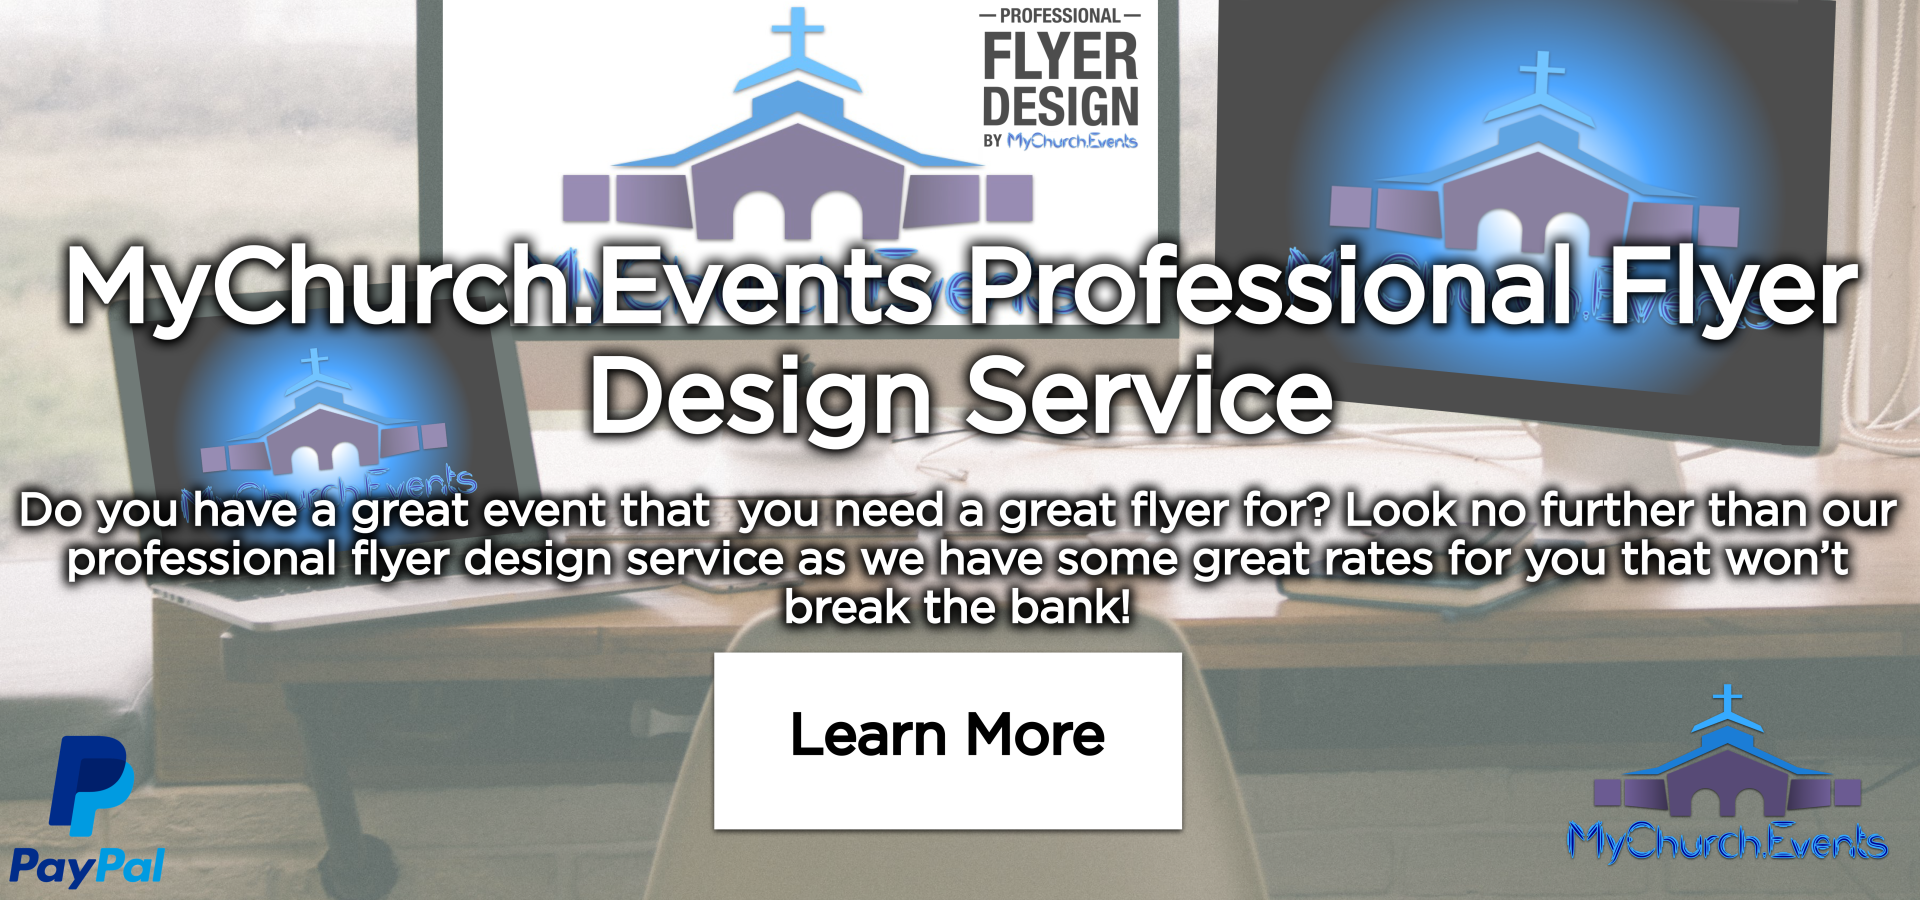 MyChurch.Events - Professional Flyer Design Service Banner